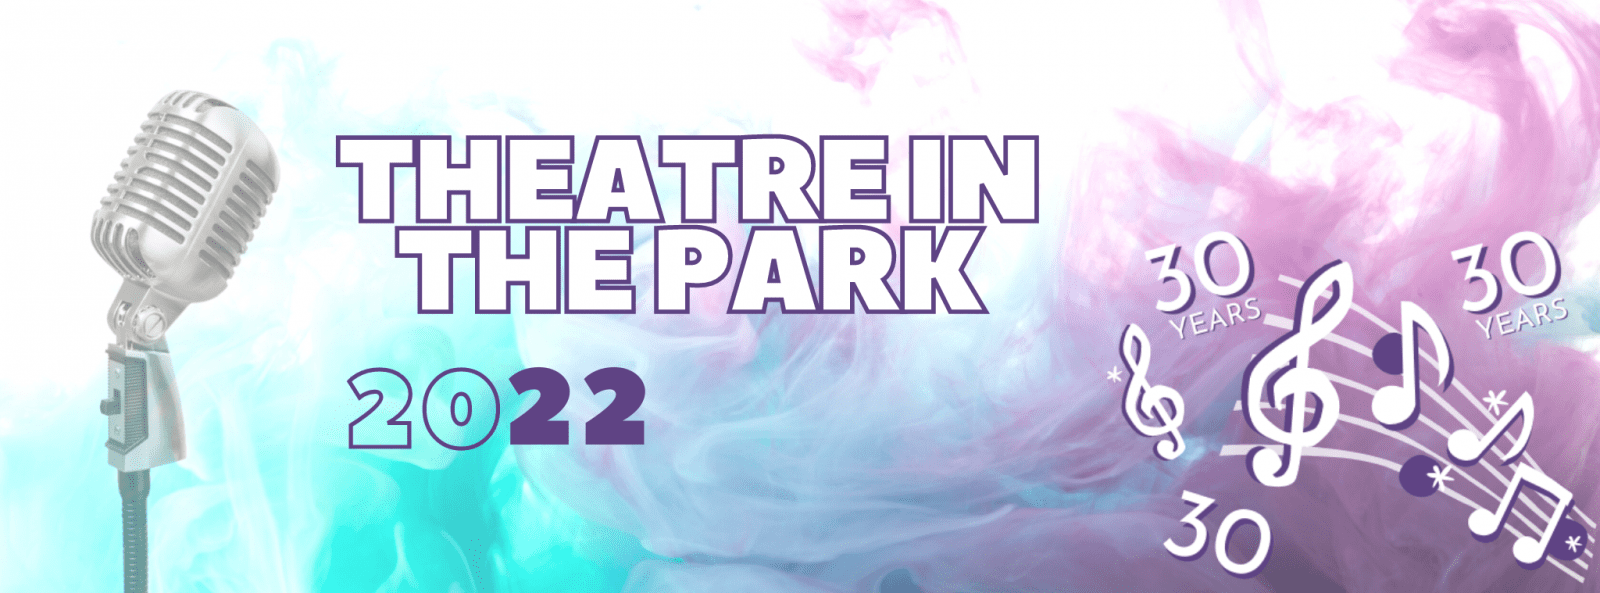 Theatre in the Park 2022